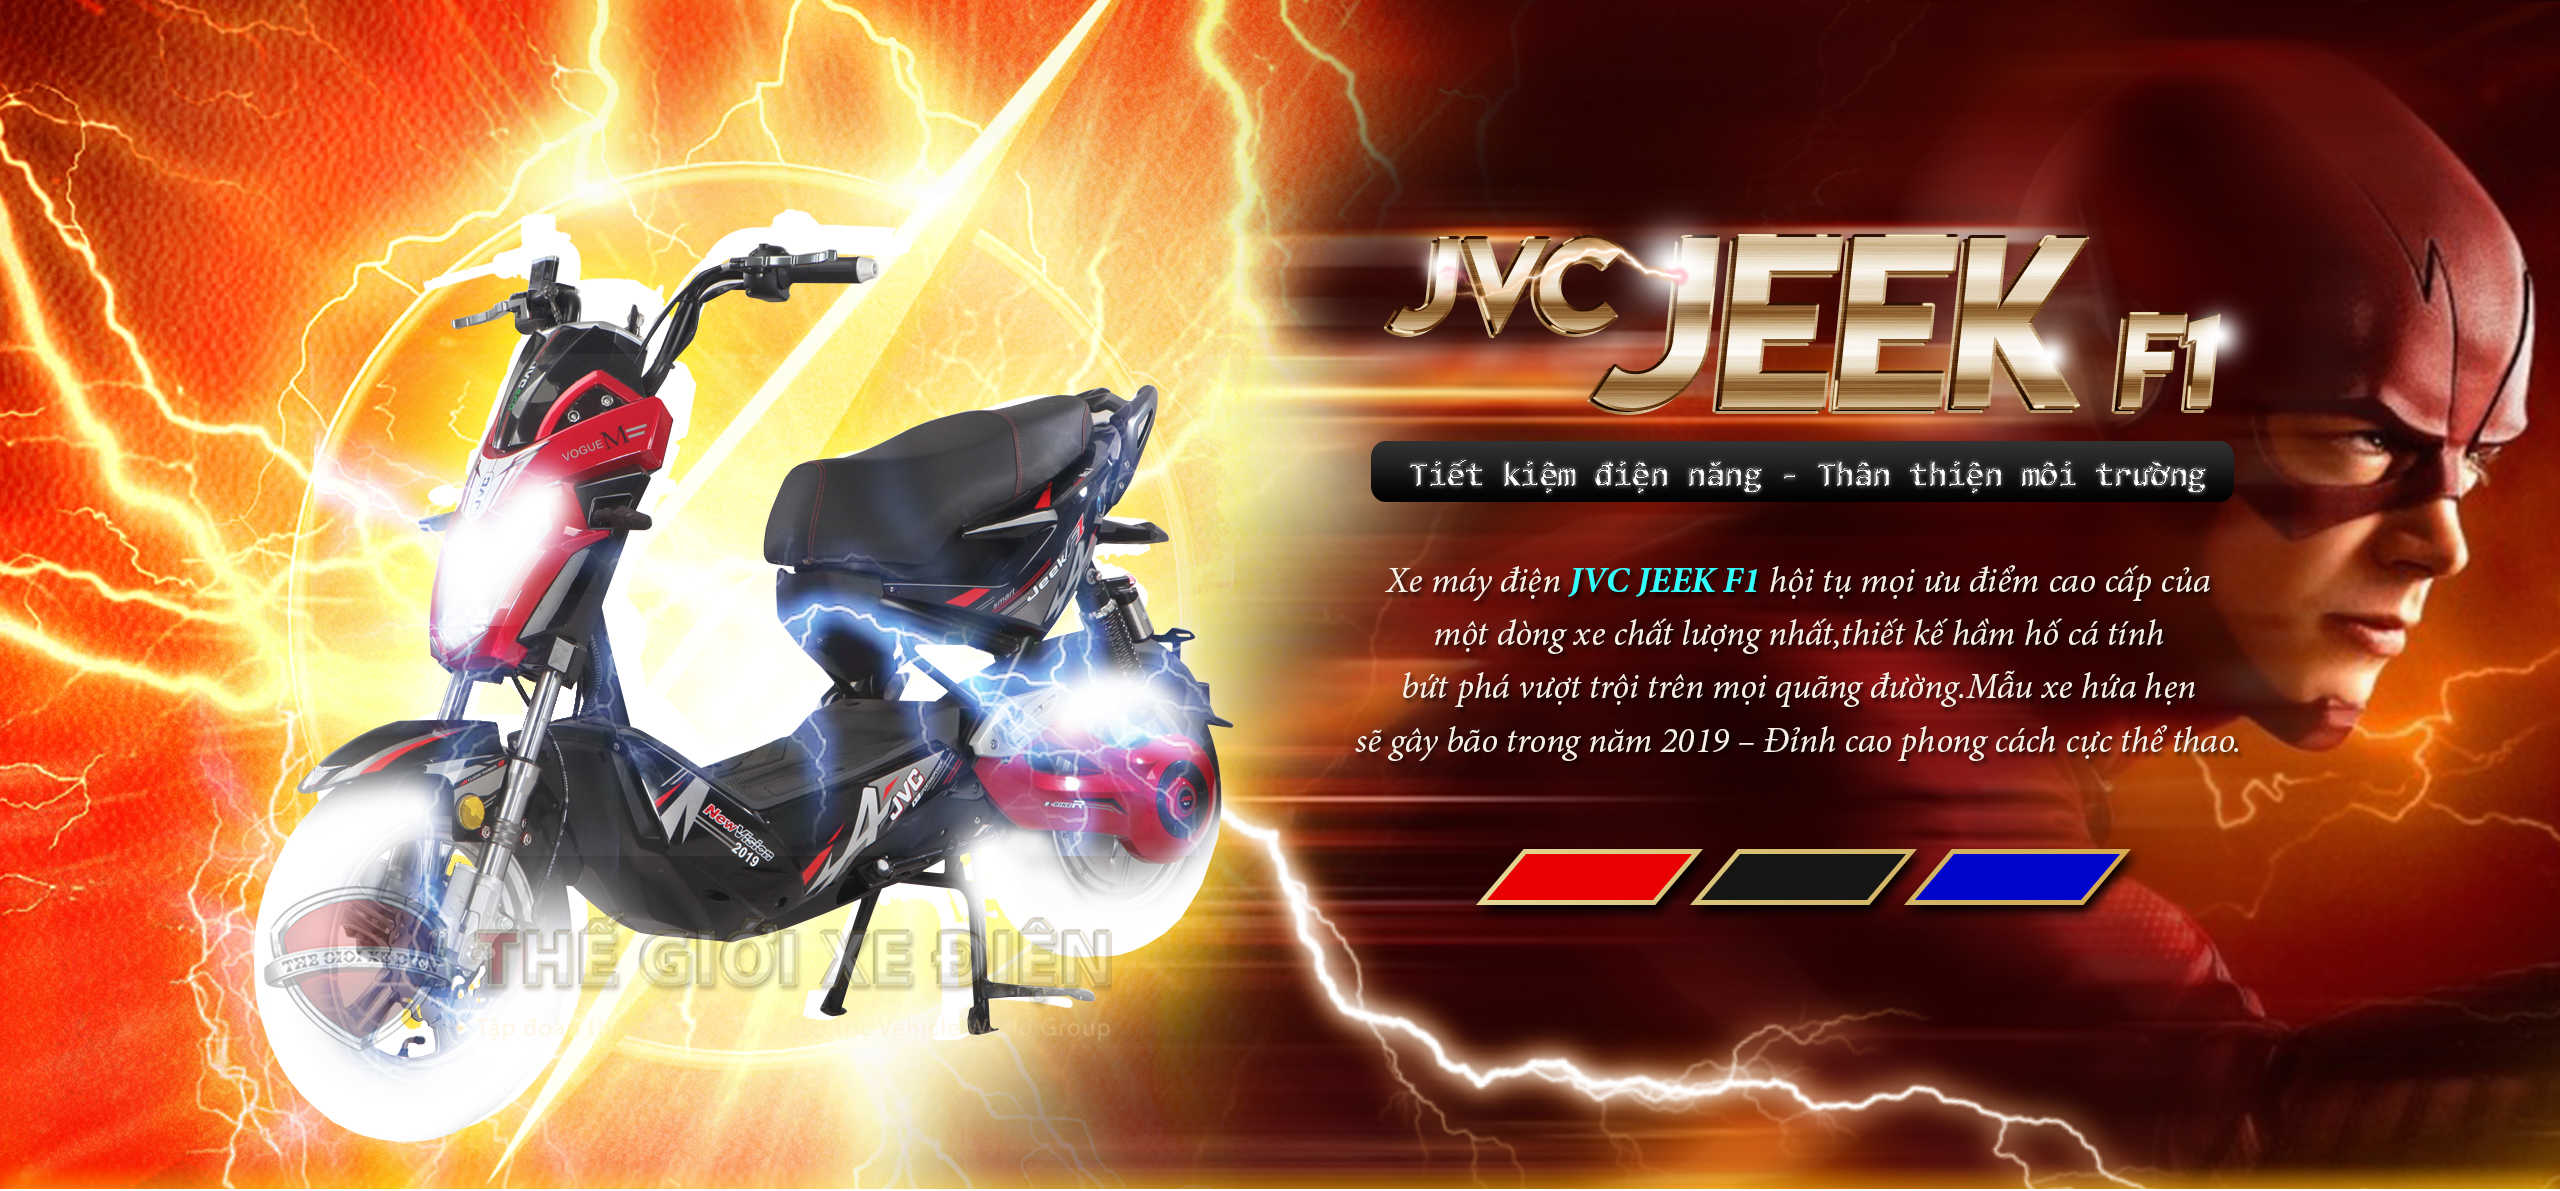 Xe điện JVC Jeek F1